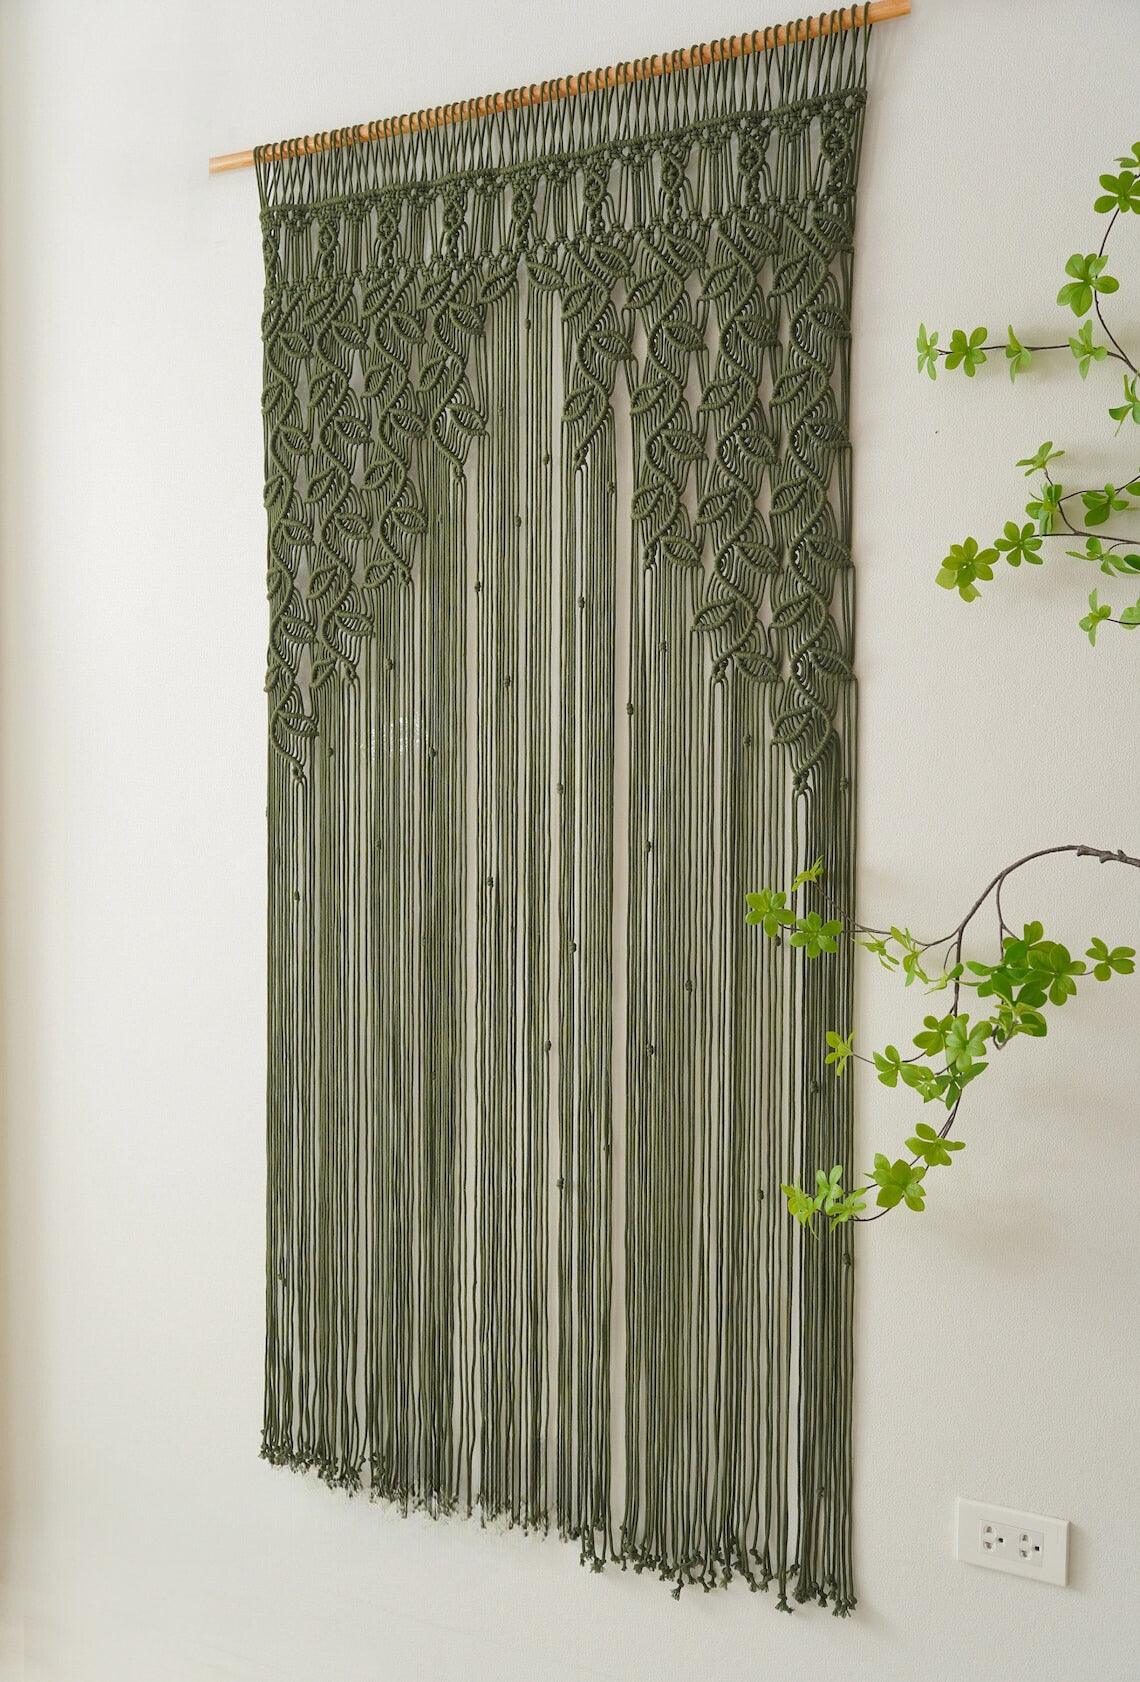 Serenity Knotwork Panels -  Macrame Curtains